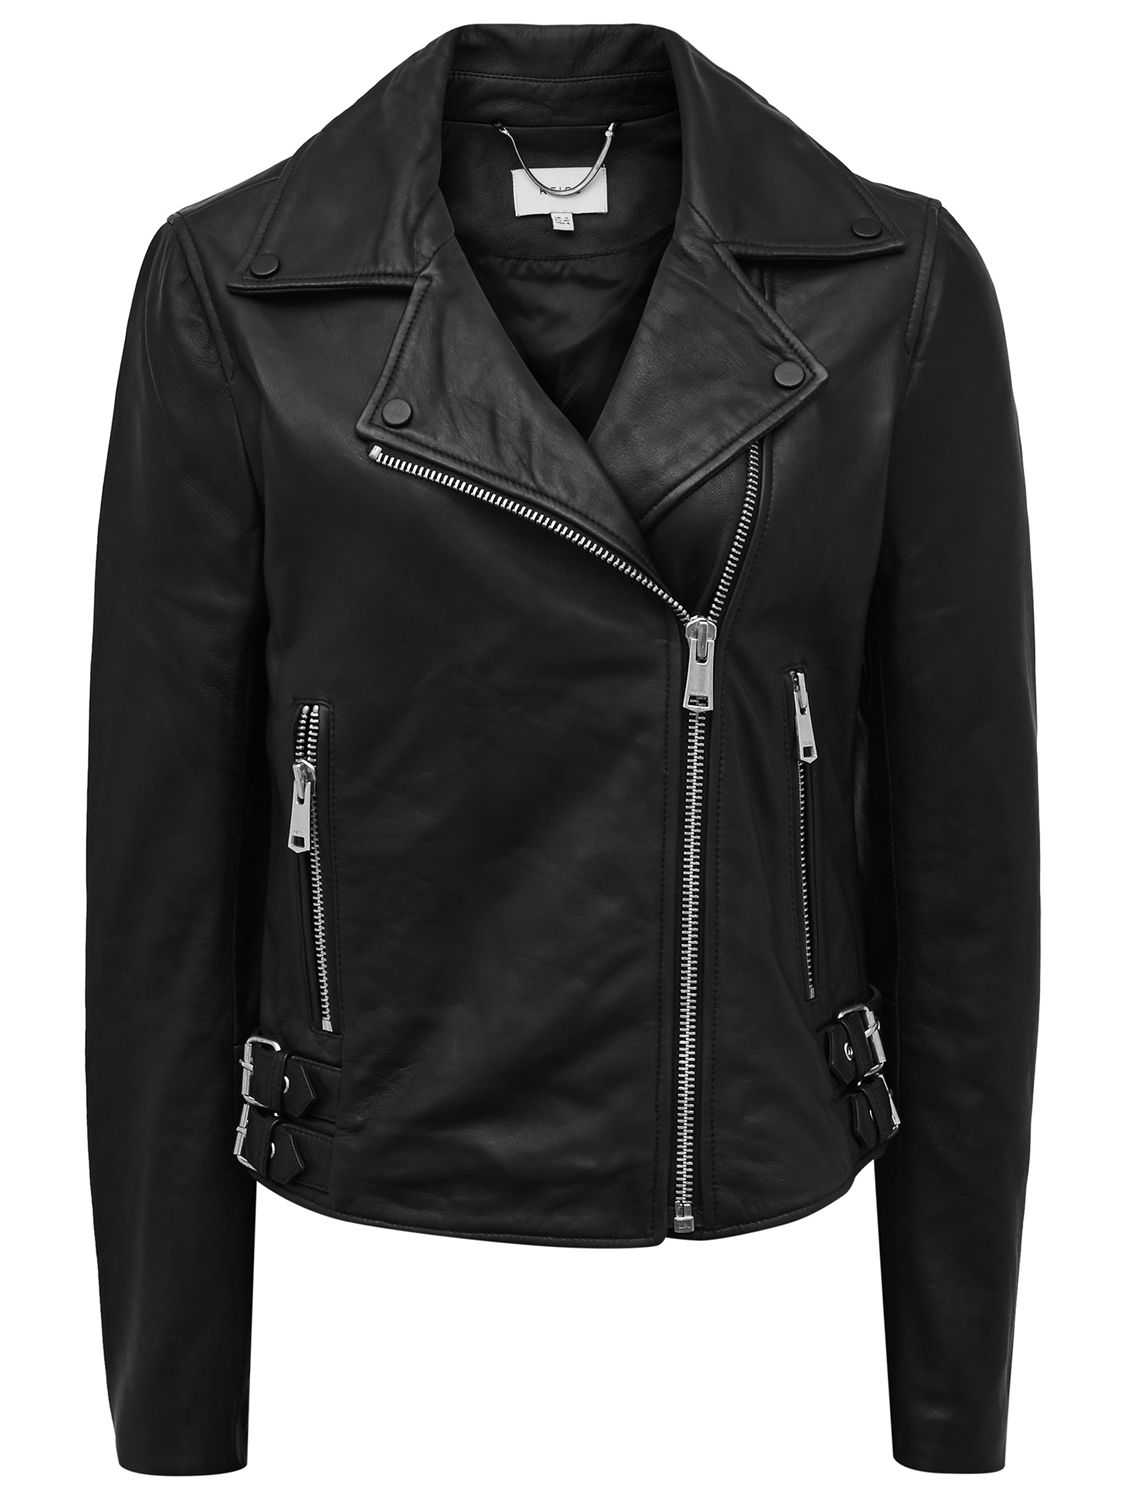 Reiss Ally Leather Biker Jacket, Black at John Lewis & Partners